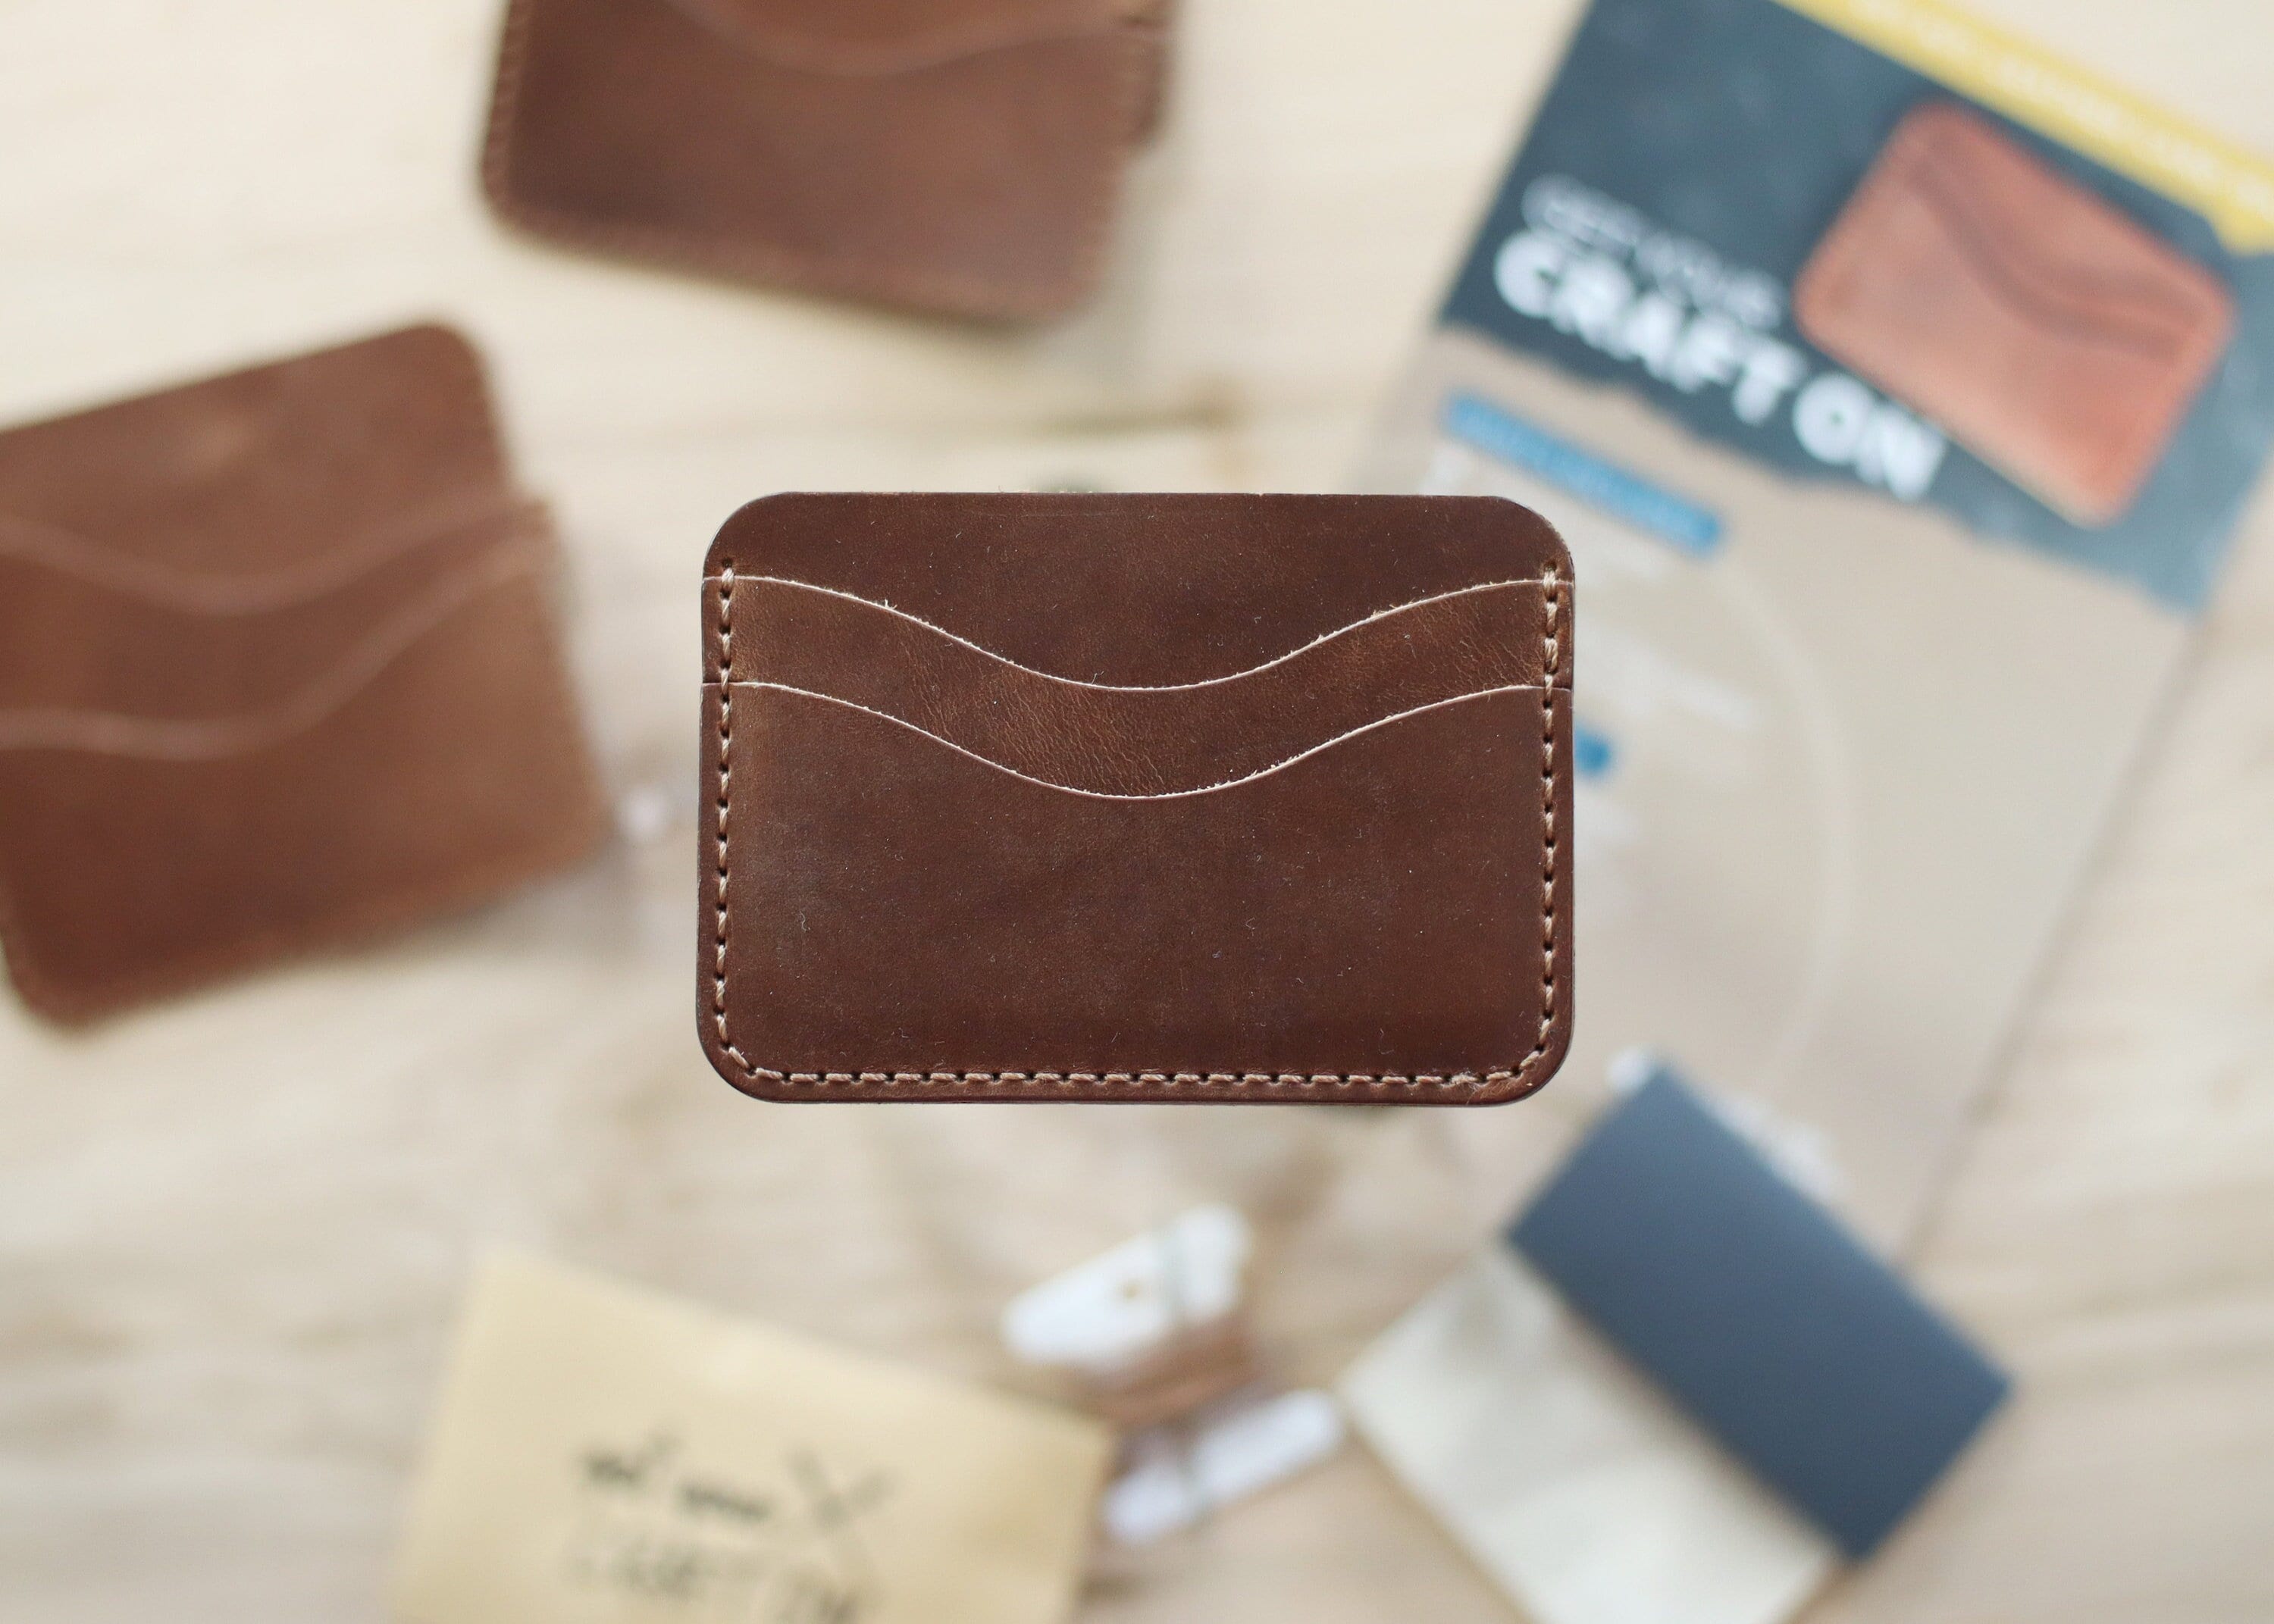 Hippo Leather Card Holder Kit DIY Leather Card Wallet Kit DIY Leather  Projects DIY Leather Kit